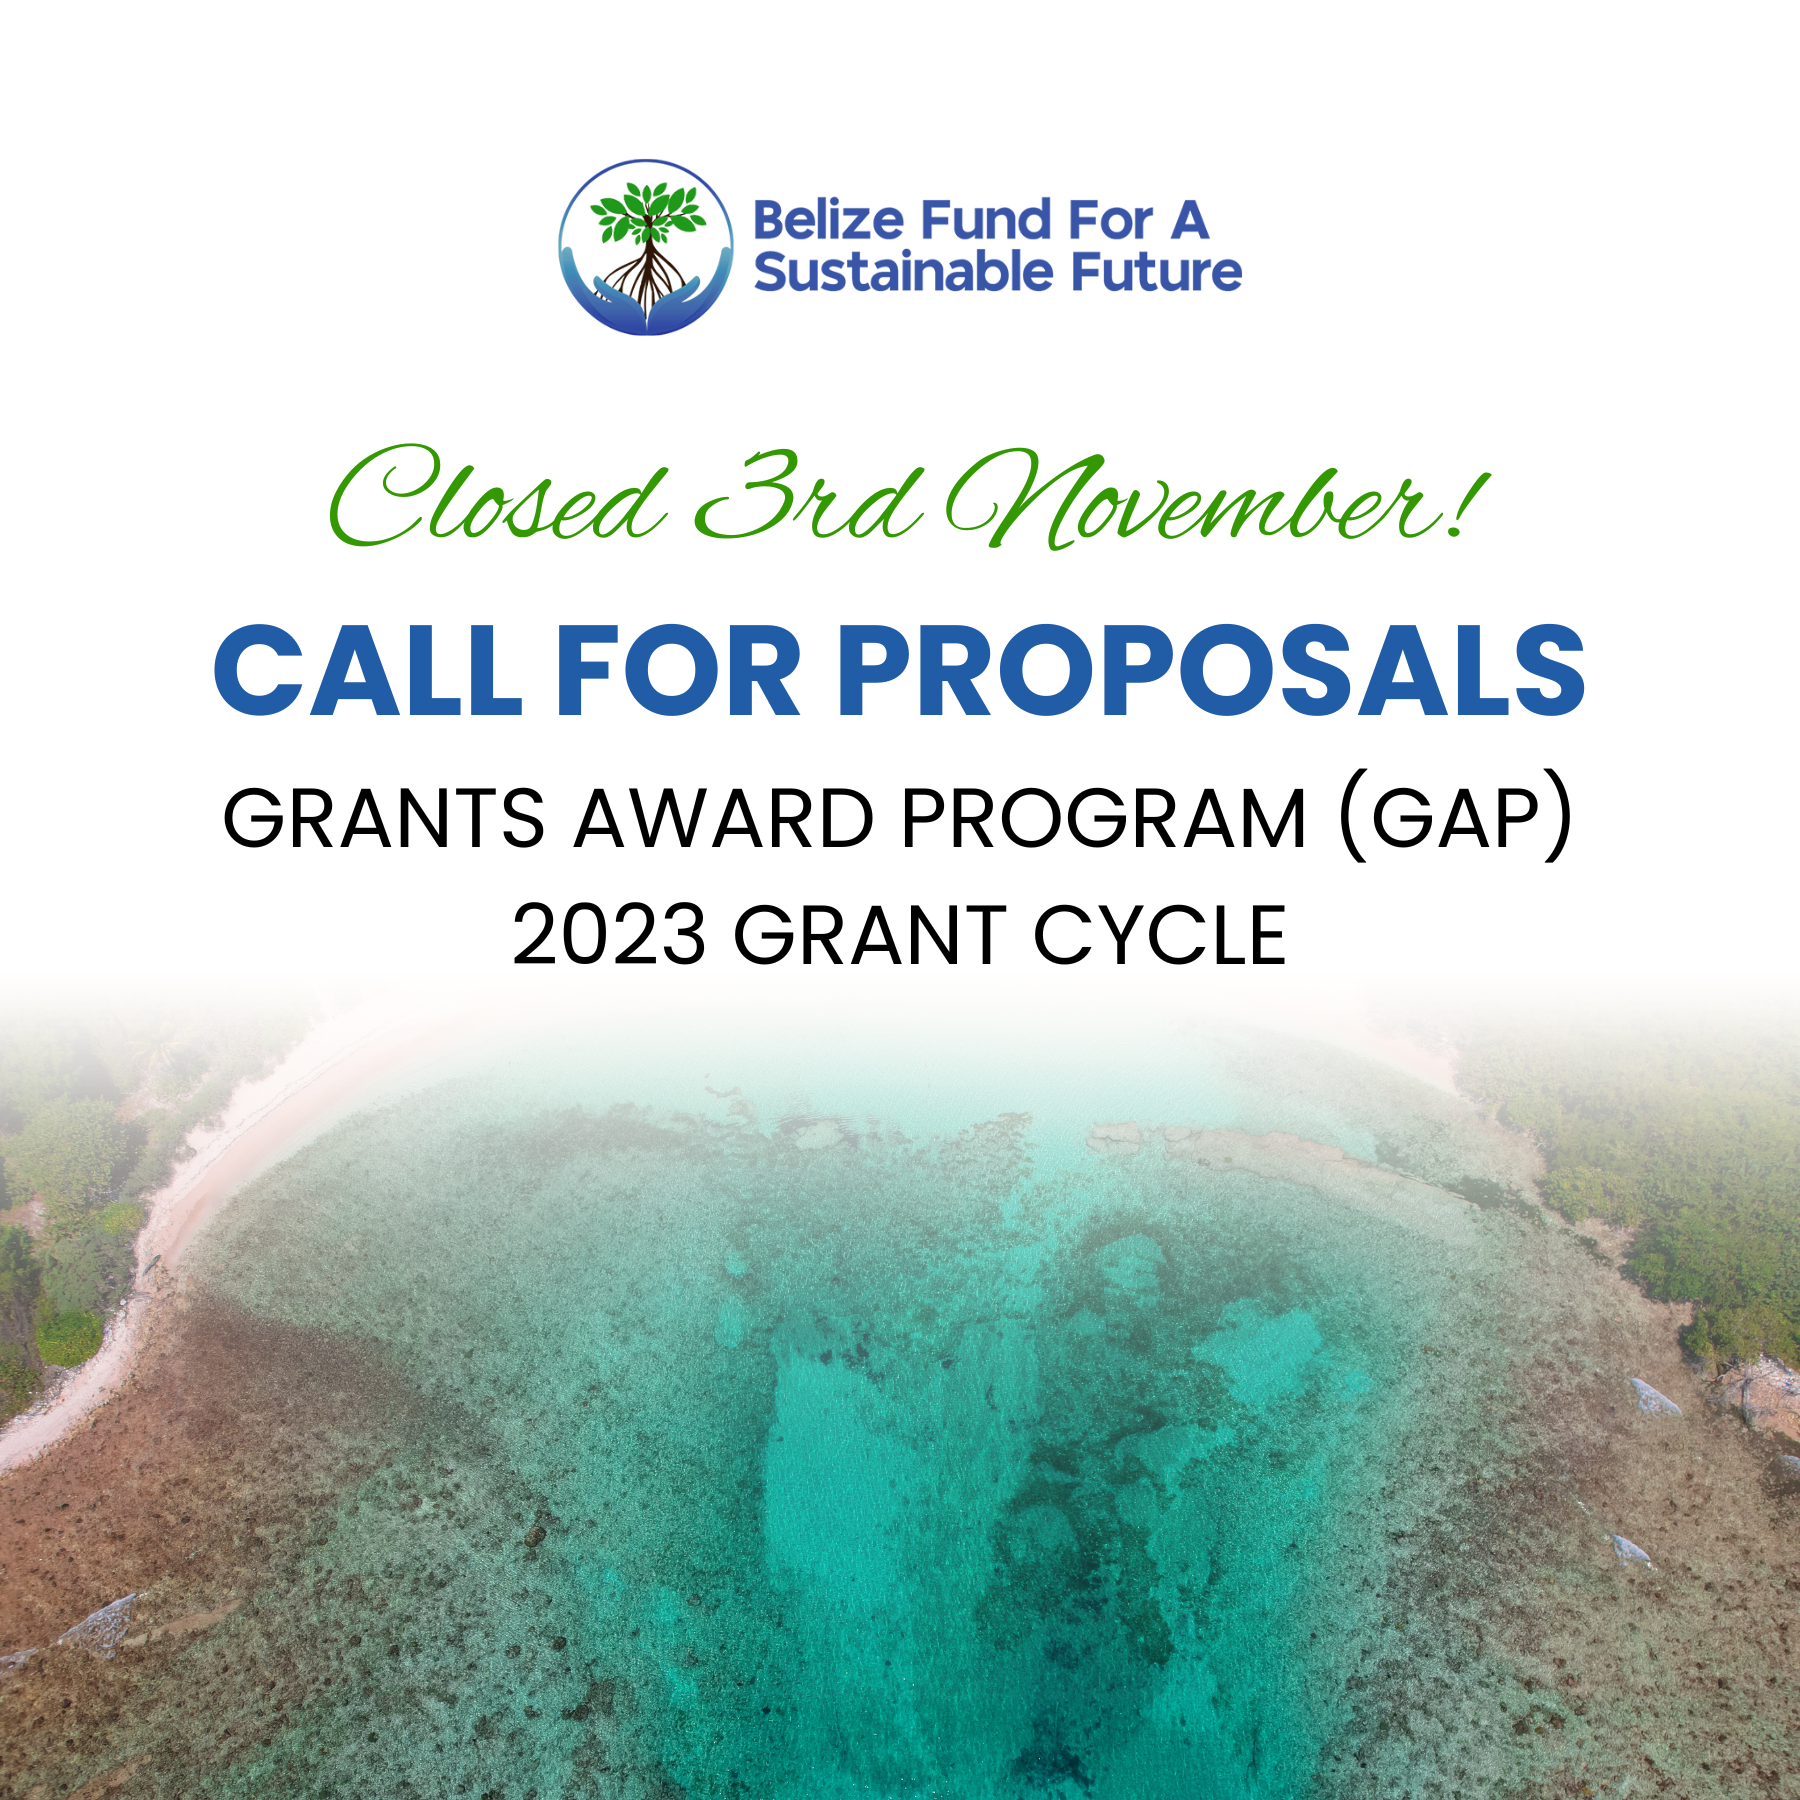 The Grants Award Program (Gap) 2023 grant cycle closed on Nov 3, 2023